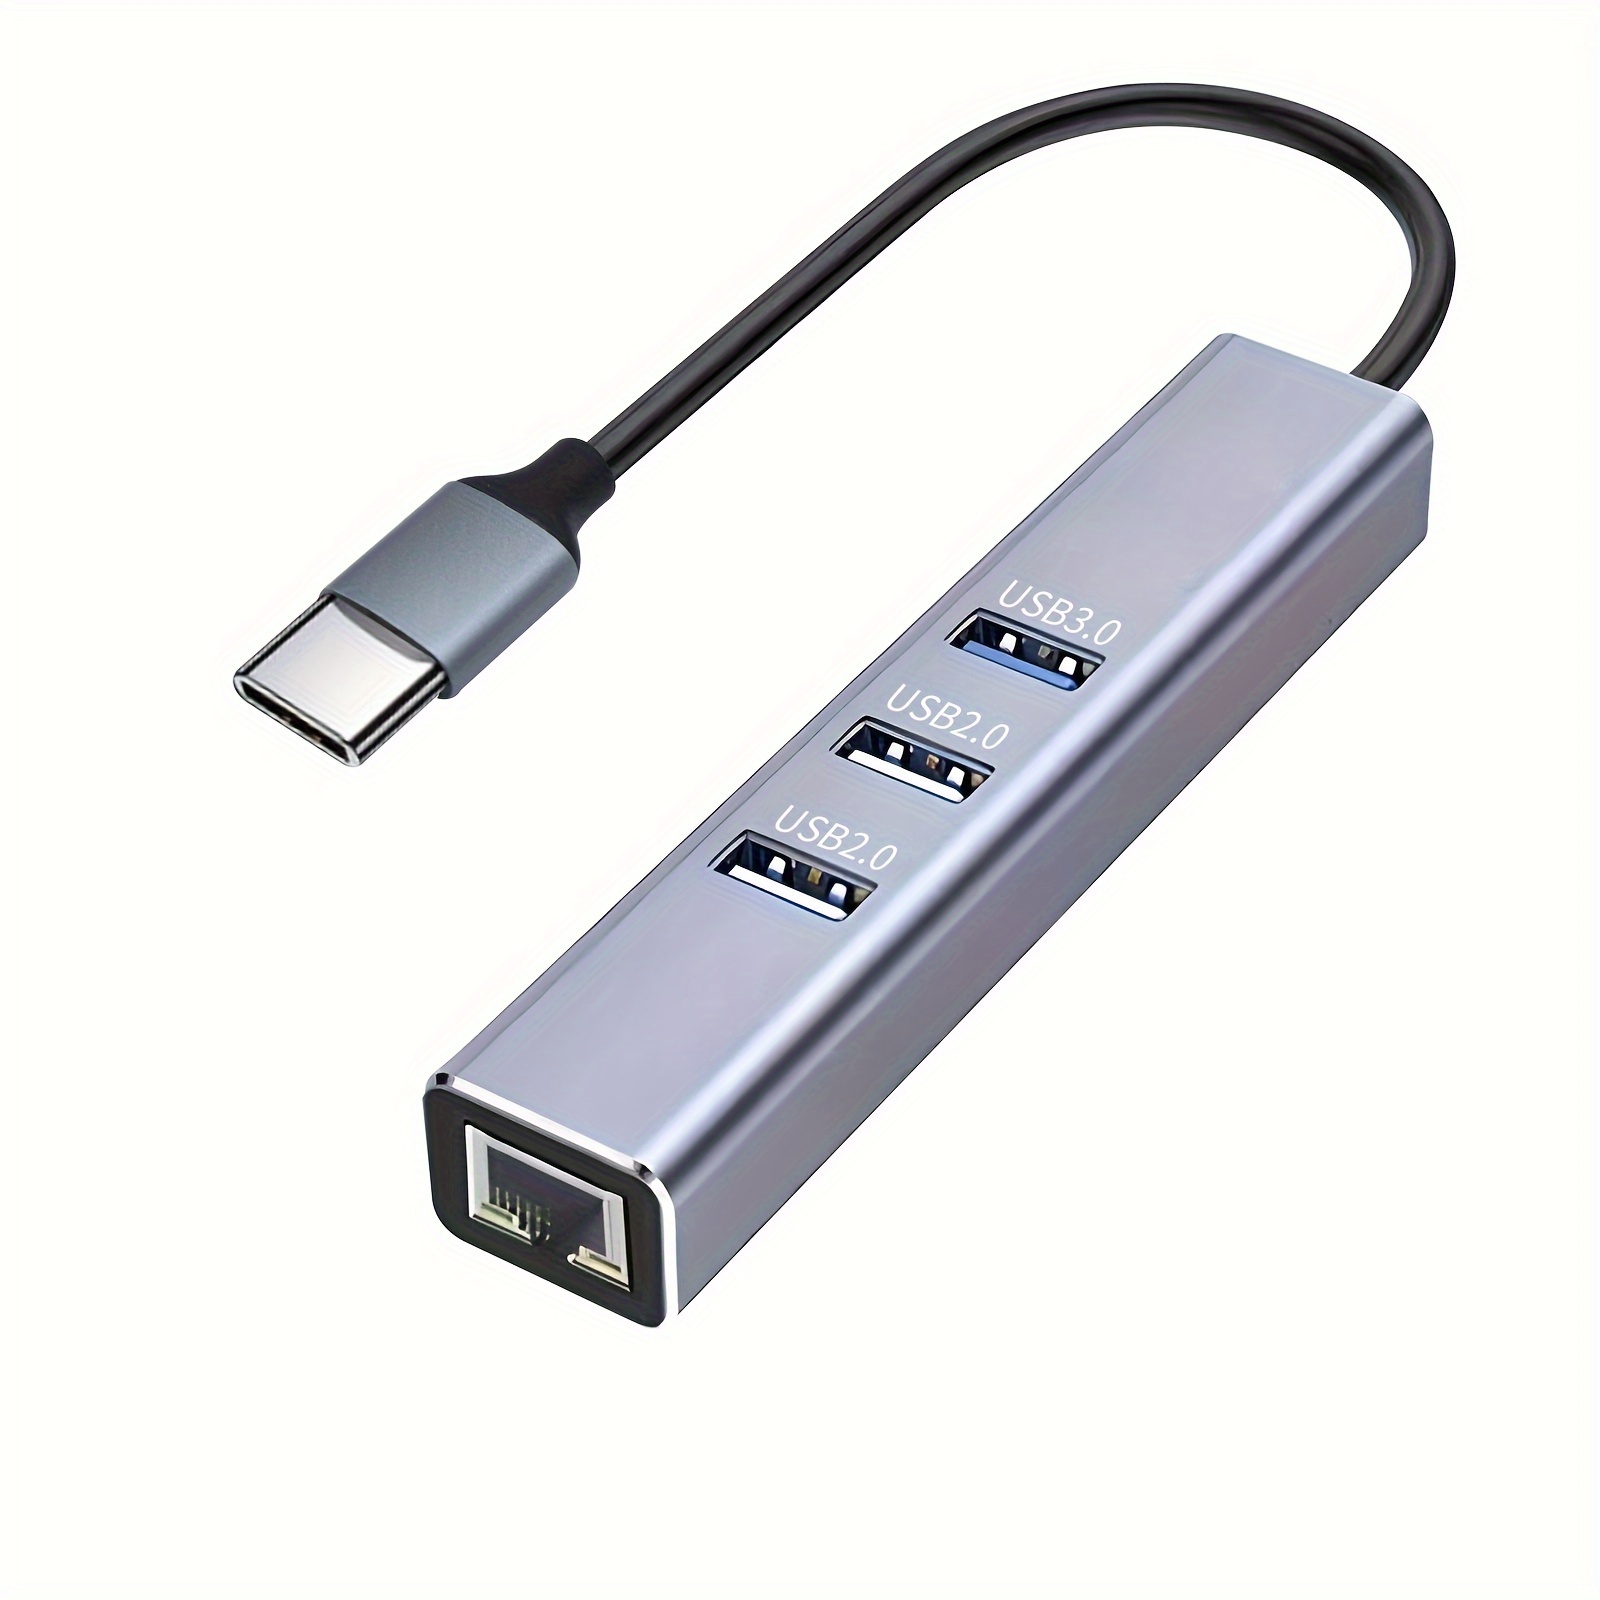 iDsonix USB C Hub 4 Ports, 5Gbps USB C to USB 3.0 Hub Adapter with 4 USB  3.0 Ports, USB C Splitter for MacBook, Mac Pro, iMac, Windows/Mac OS,  Linux